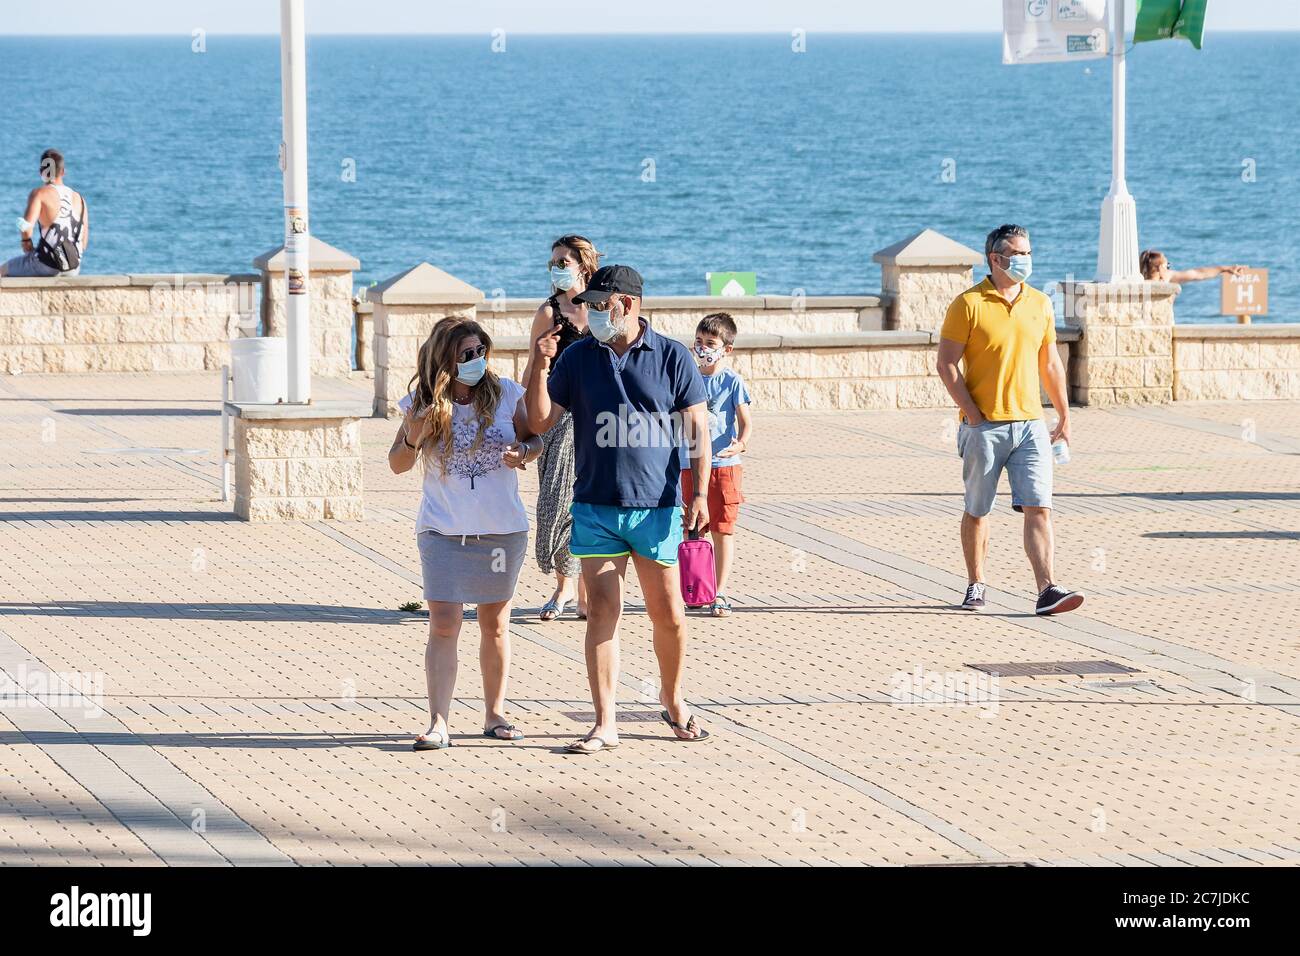 Huelva, Spanien - 3. Juni 2020: Menschen, die an der Islantilla Promenade entlang gehen, tragen Schutzmaske wegen Covid-19. Stockfoto